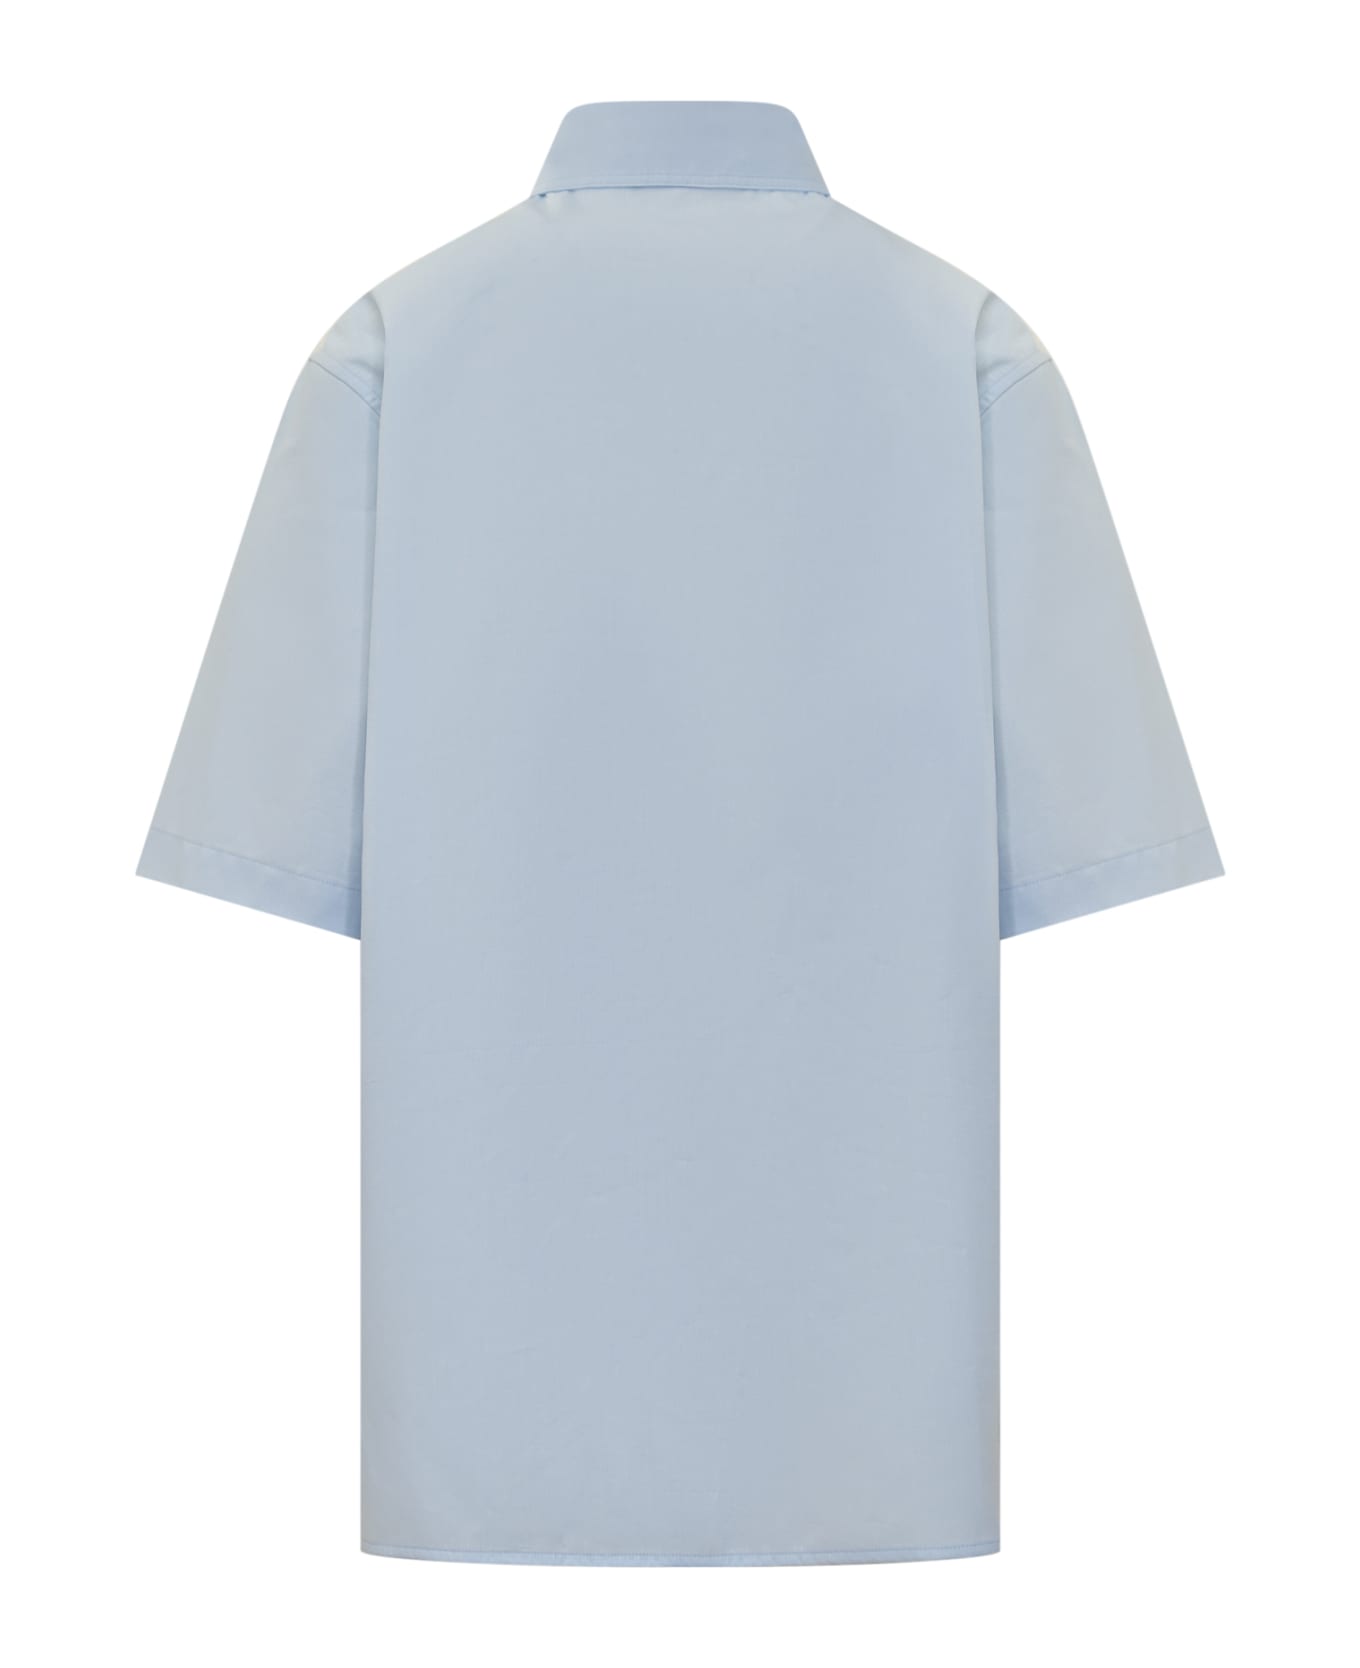 DARKPARK Shirt With Logo - Clear Blue シャツ